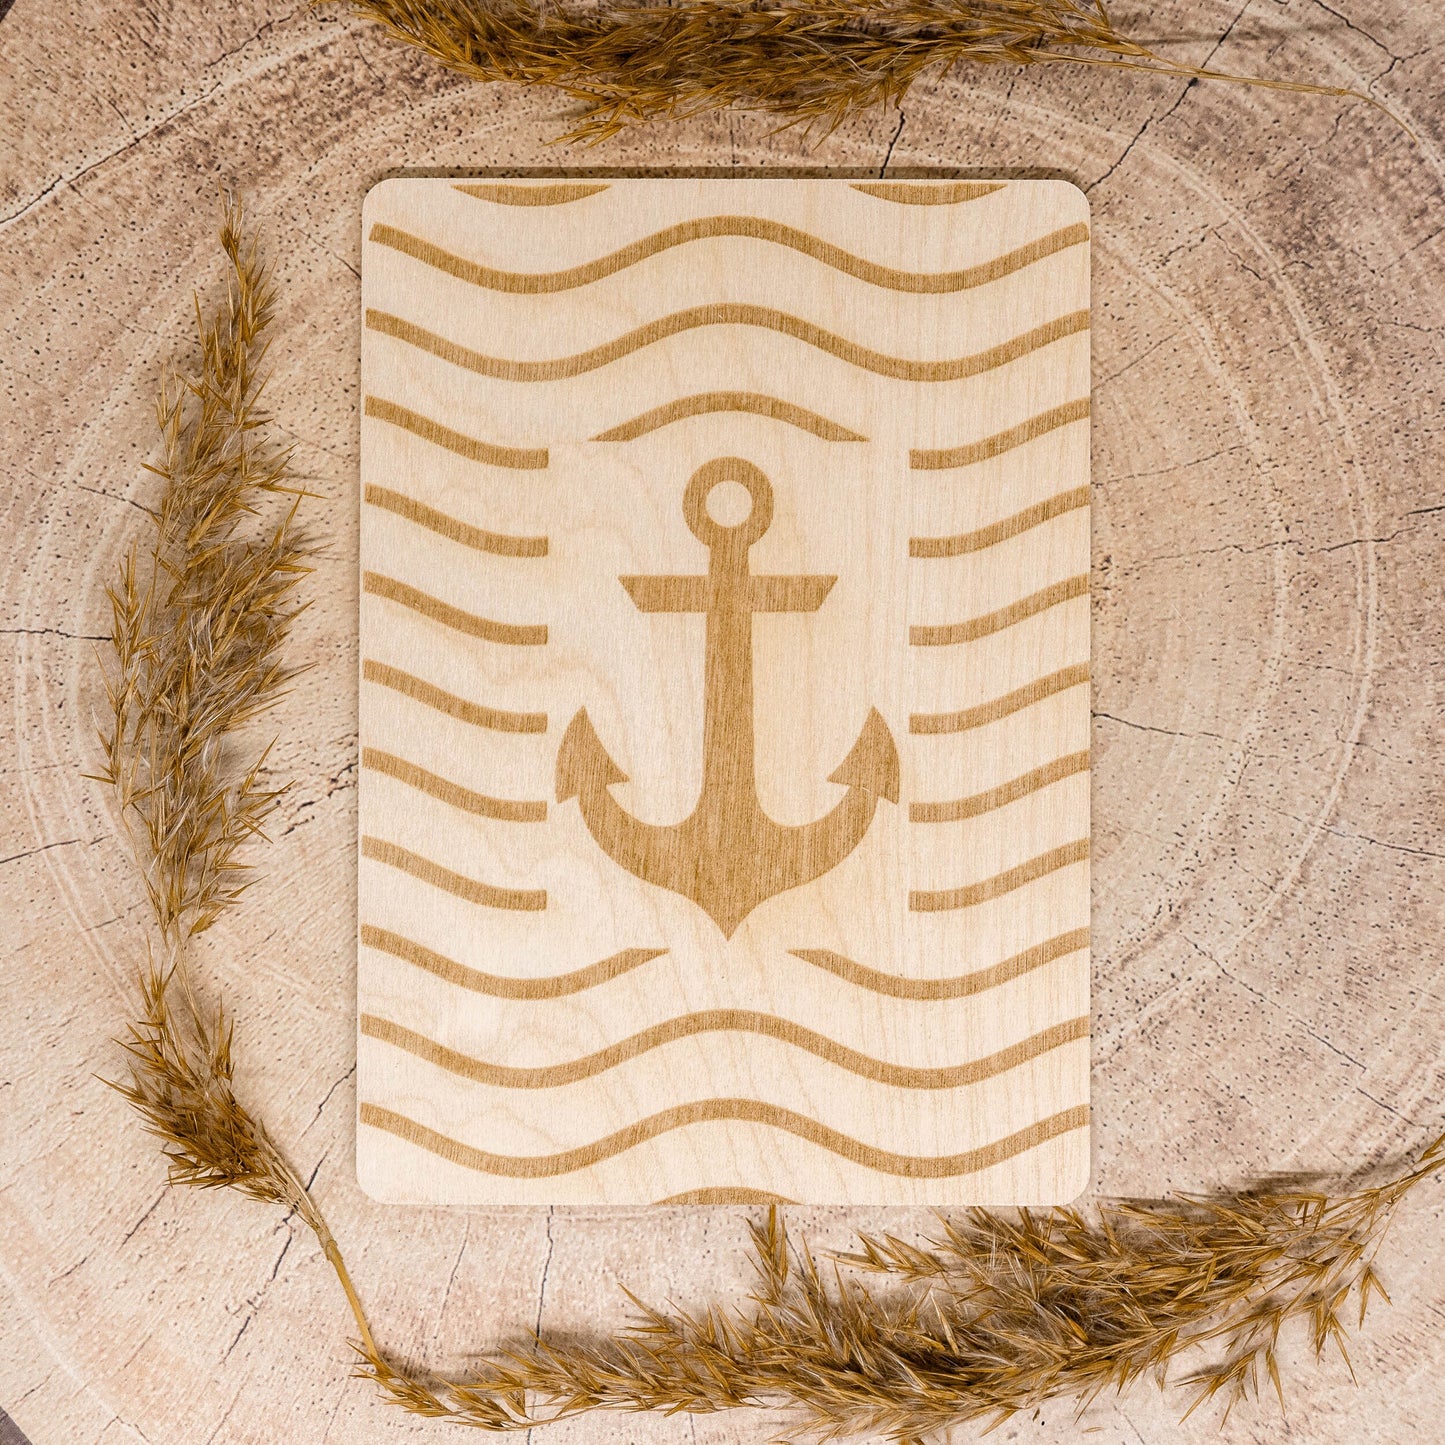 Holzpostkarte • Anker • Wellen • maritim • Holzkarte • Postkarte mit maritimem Motiv • Lasergravur • 14x10 cm